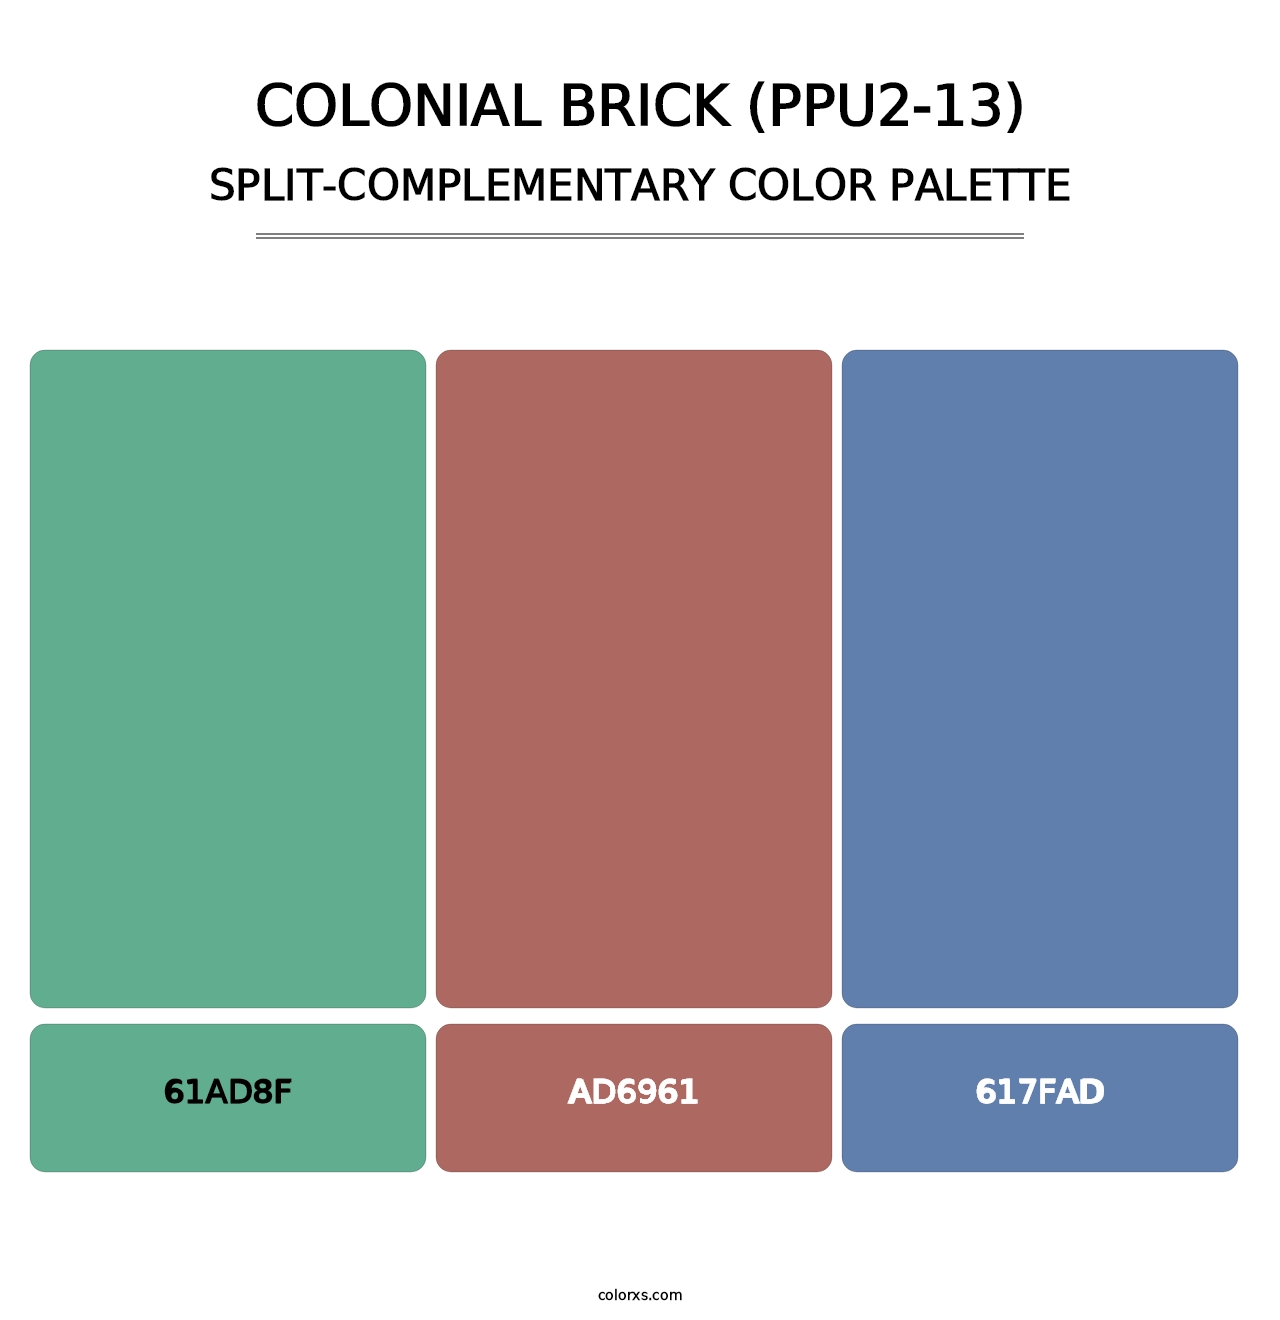 Colonial Brick (PPU2-13) - Split-Complementary Color Palette